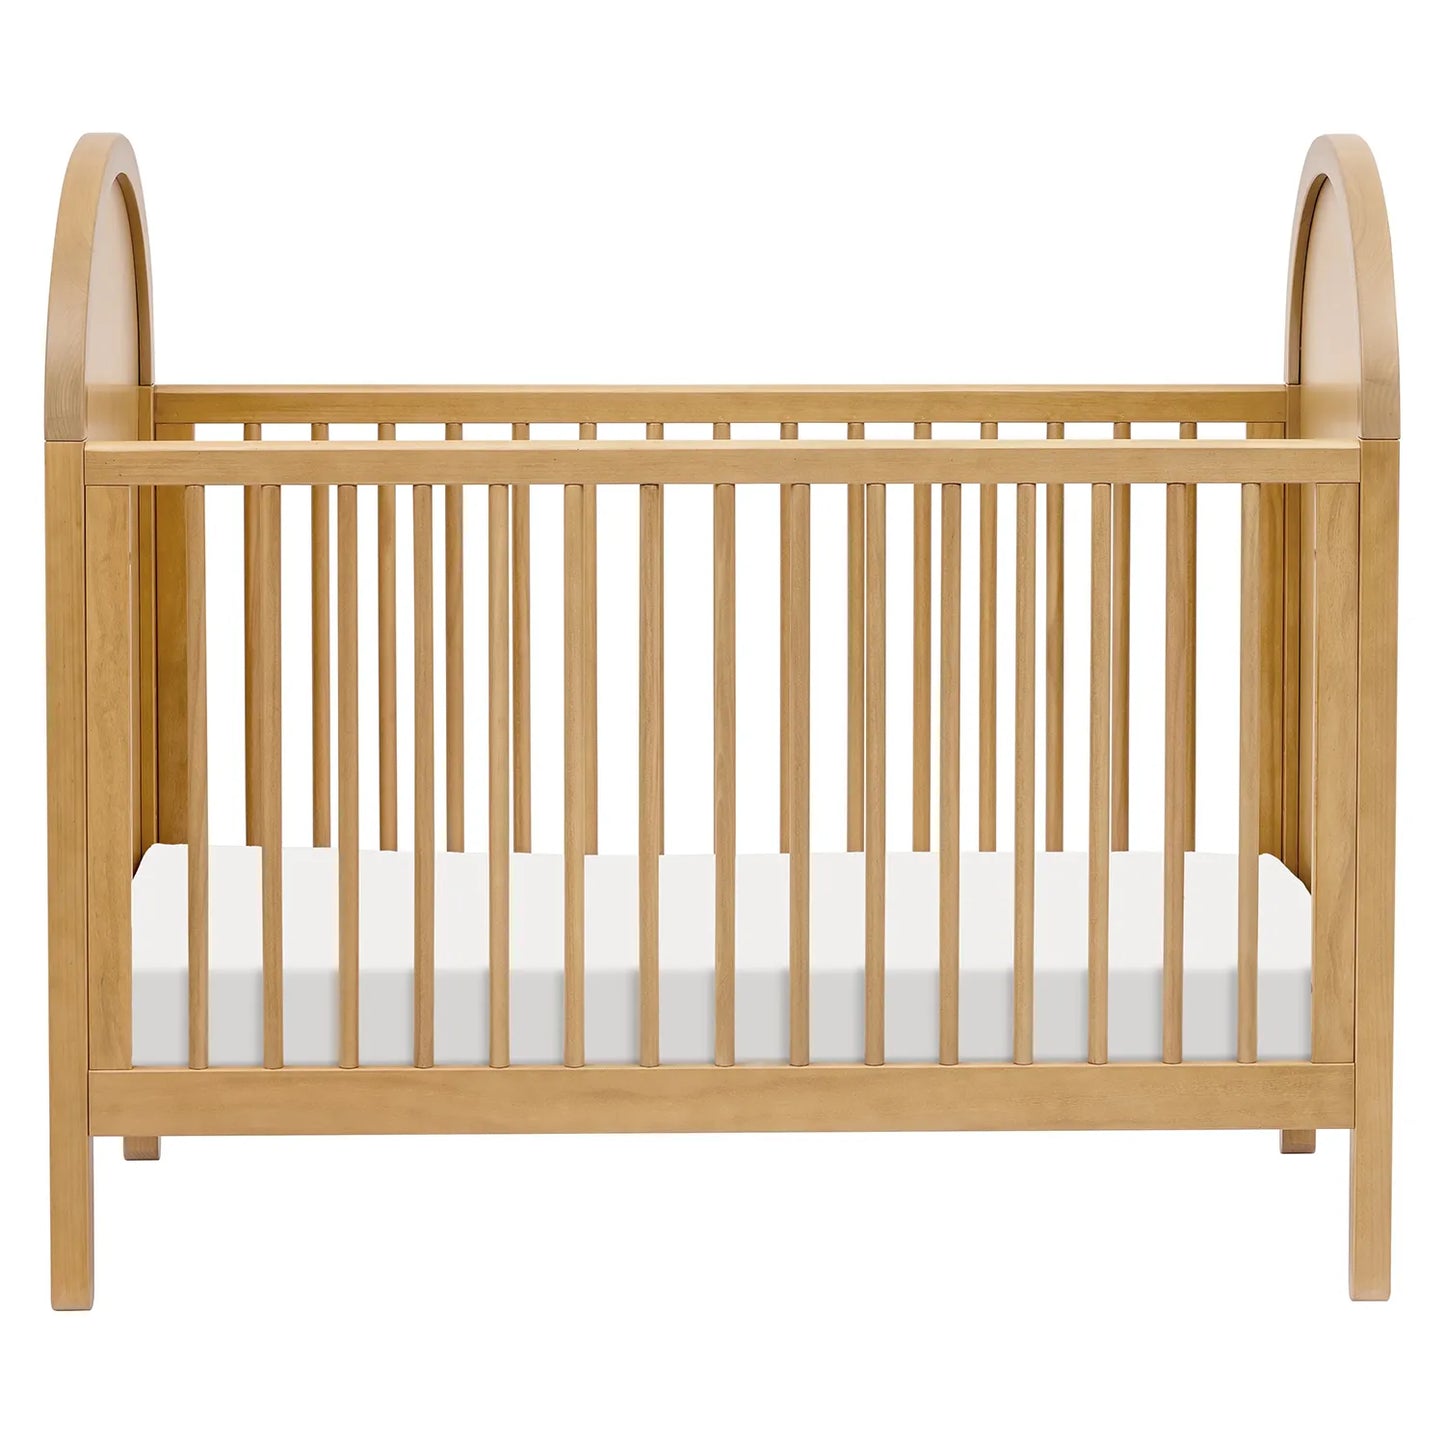 Bondi Cane 3-in-1 Convertible Crib with Toddler Bed Kit - BLET